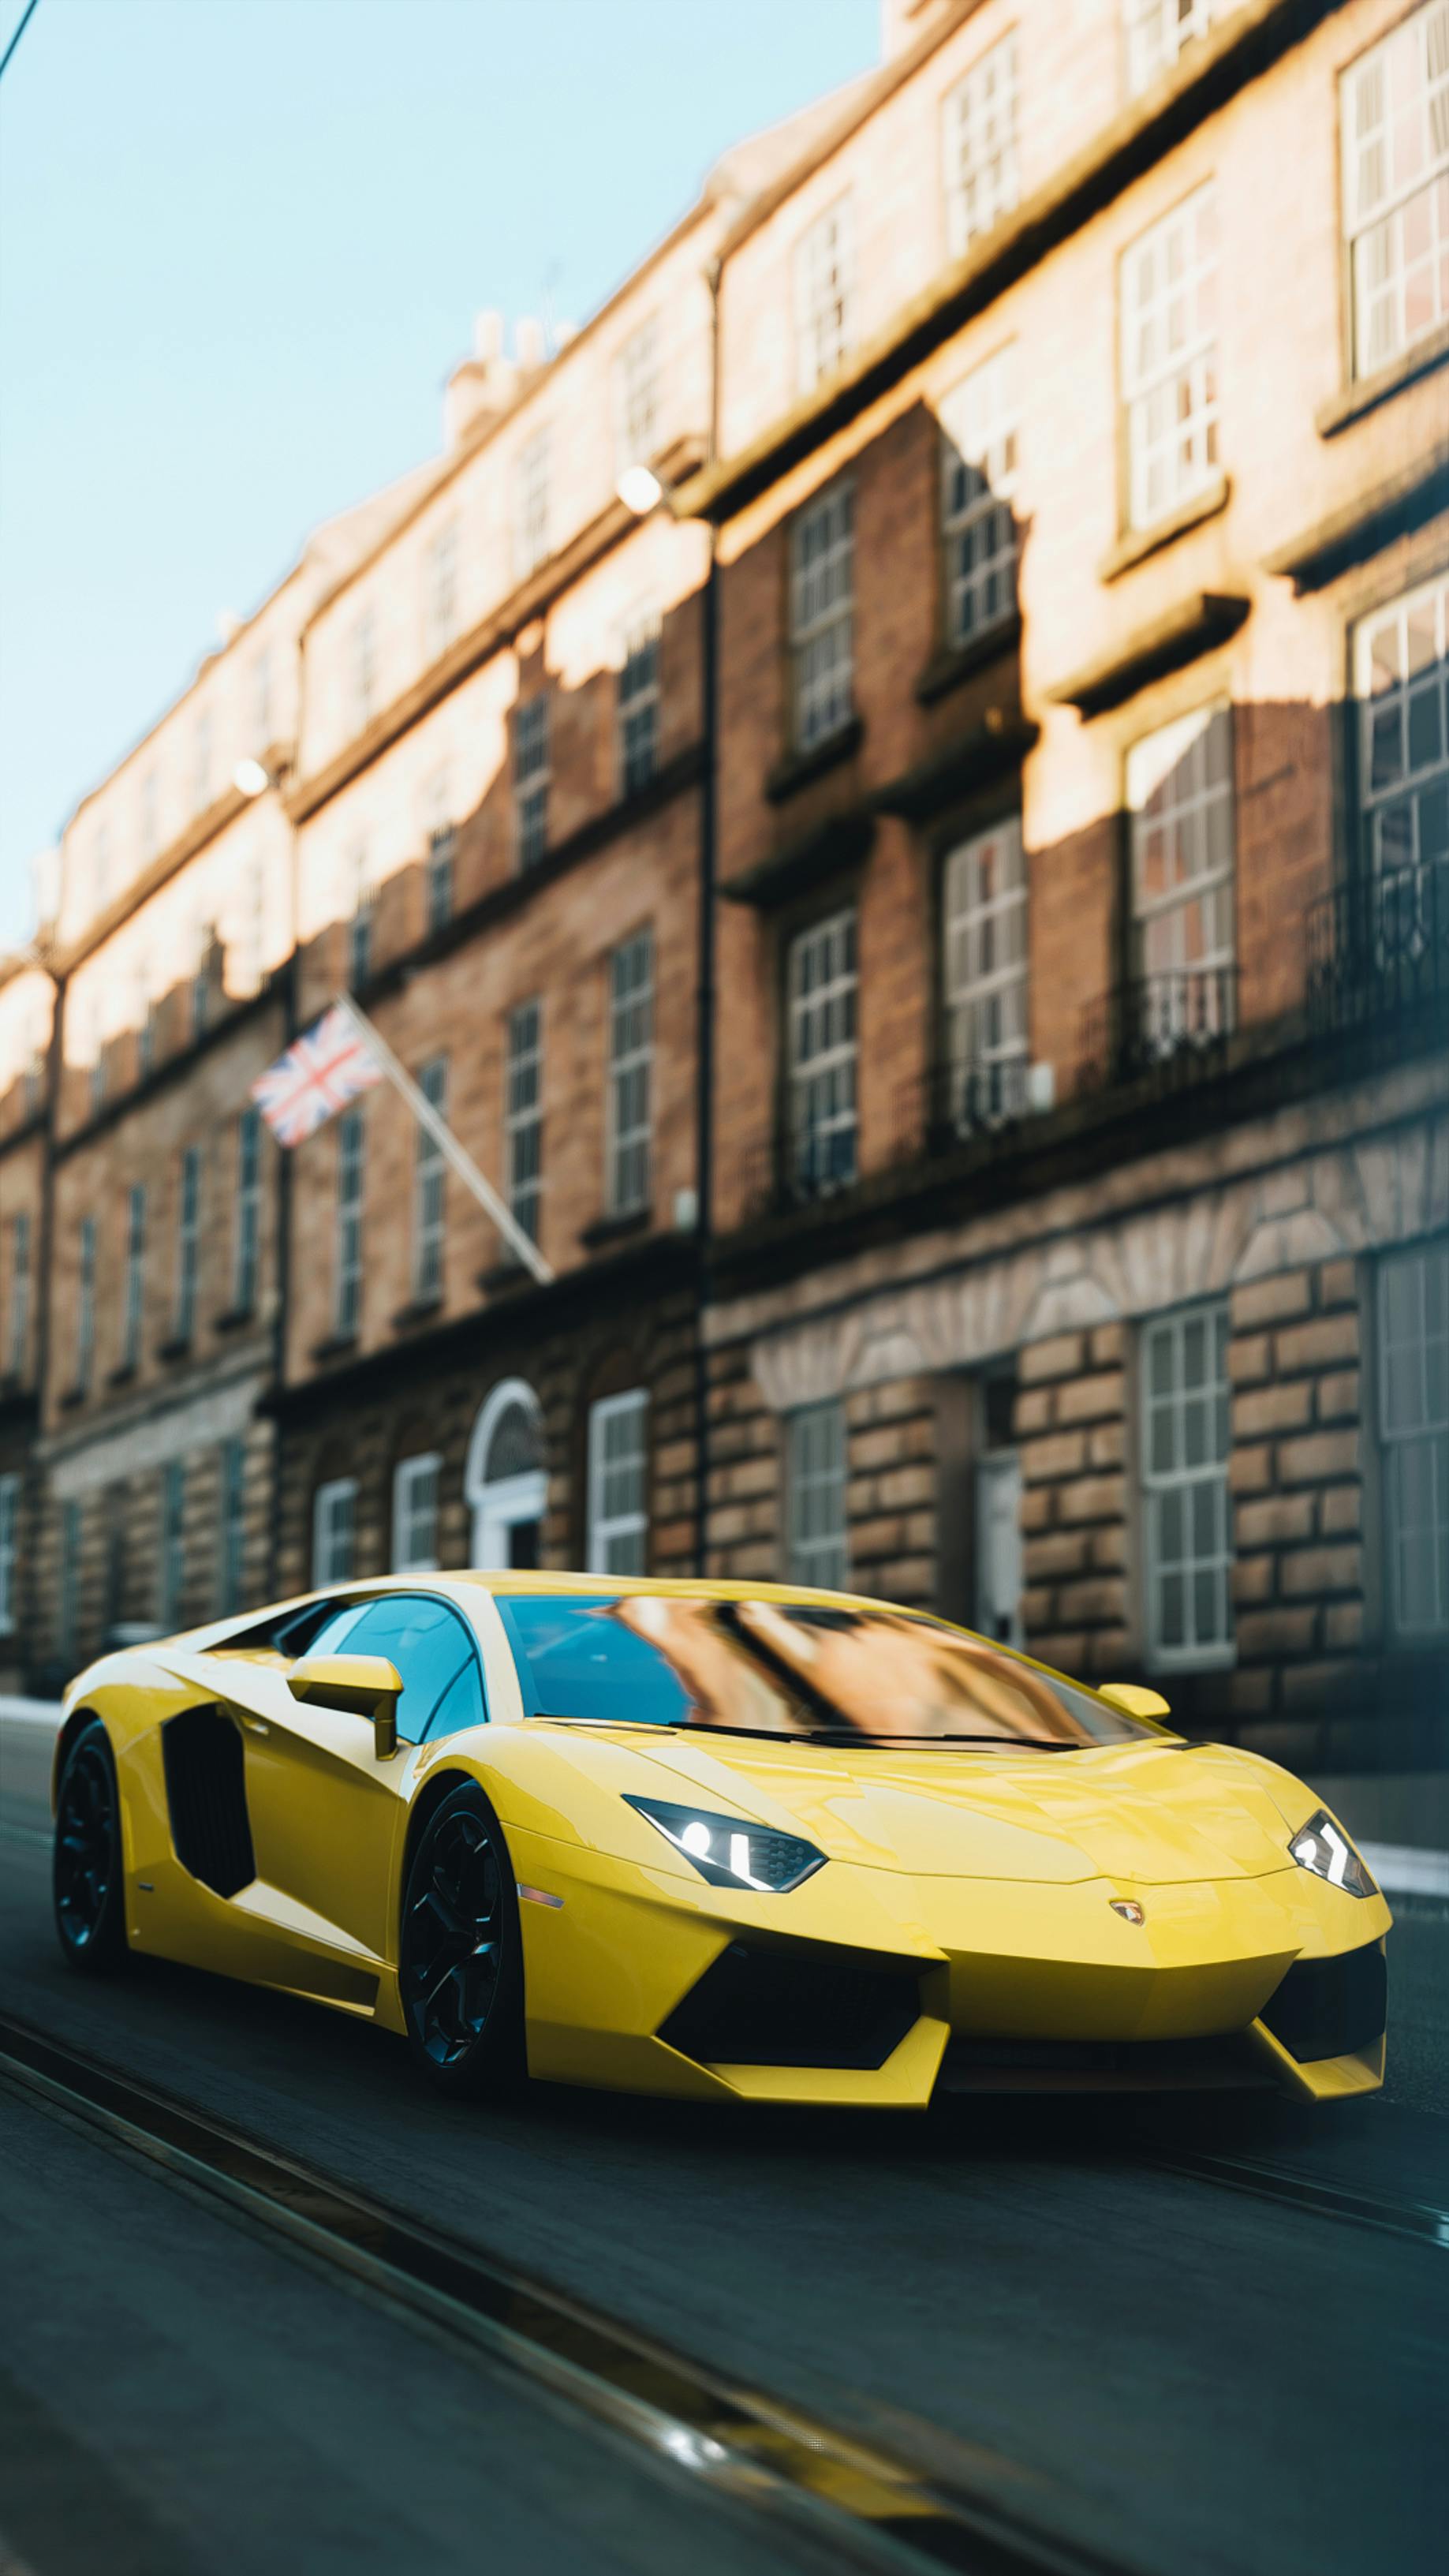 Parked Yellow Lamborghini Aventador Live Wallpaper